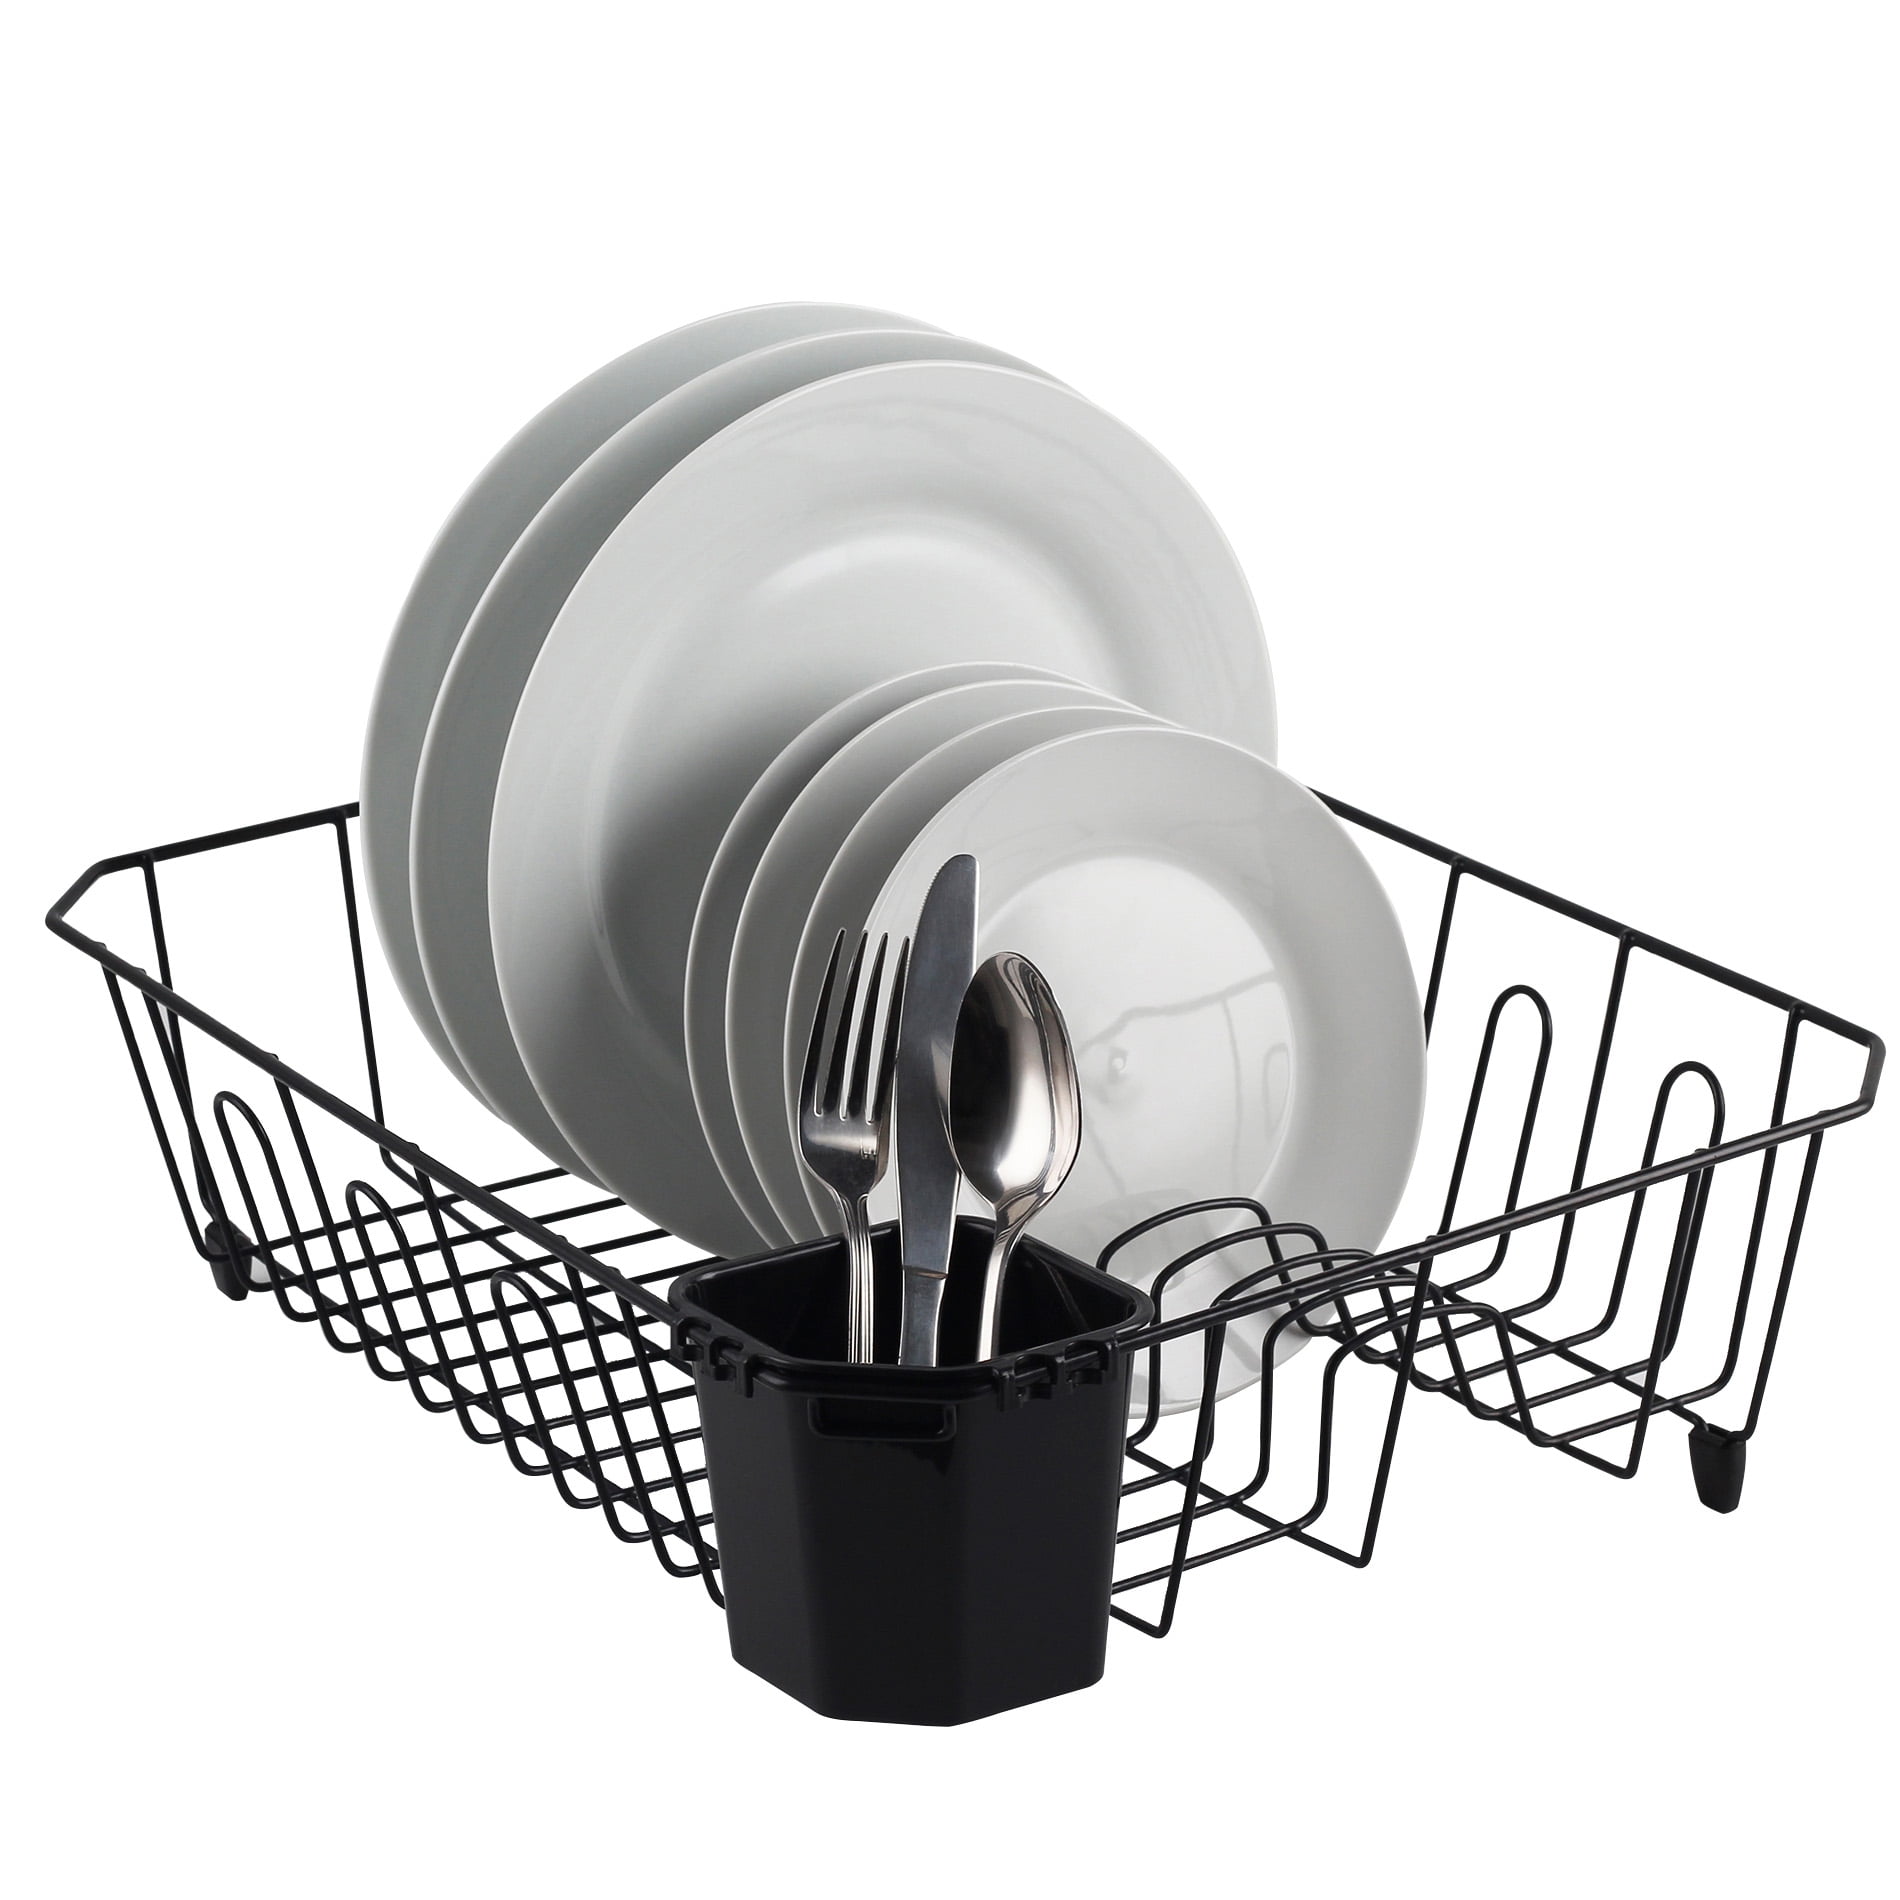 Kitchen utensil and dish drainer stand and drainer black - DVINA online  shopping for household utensils home decor flowers